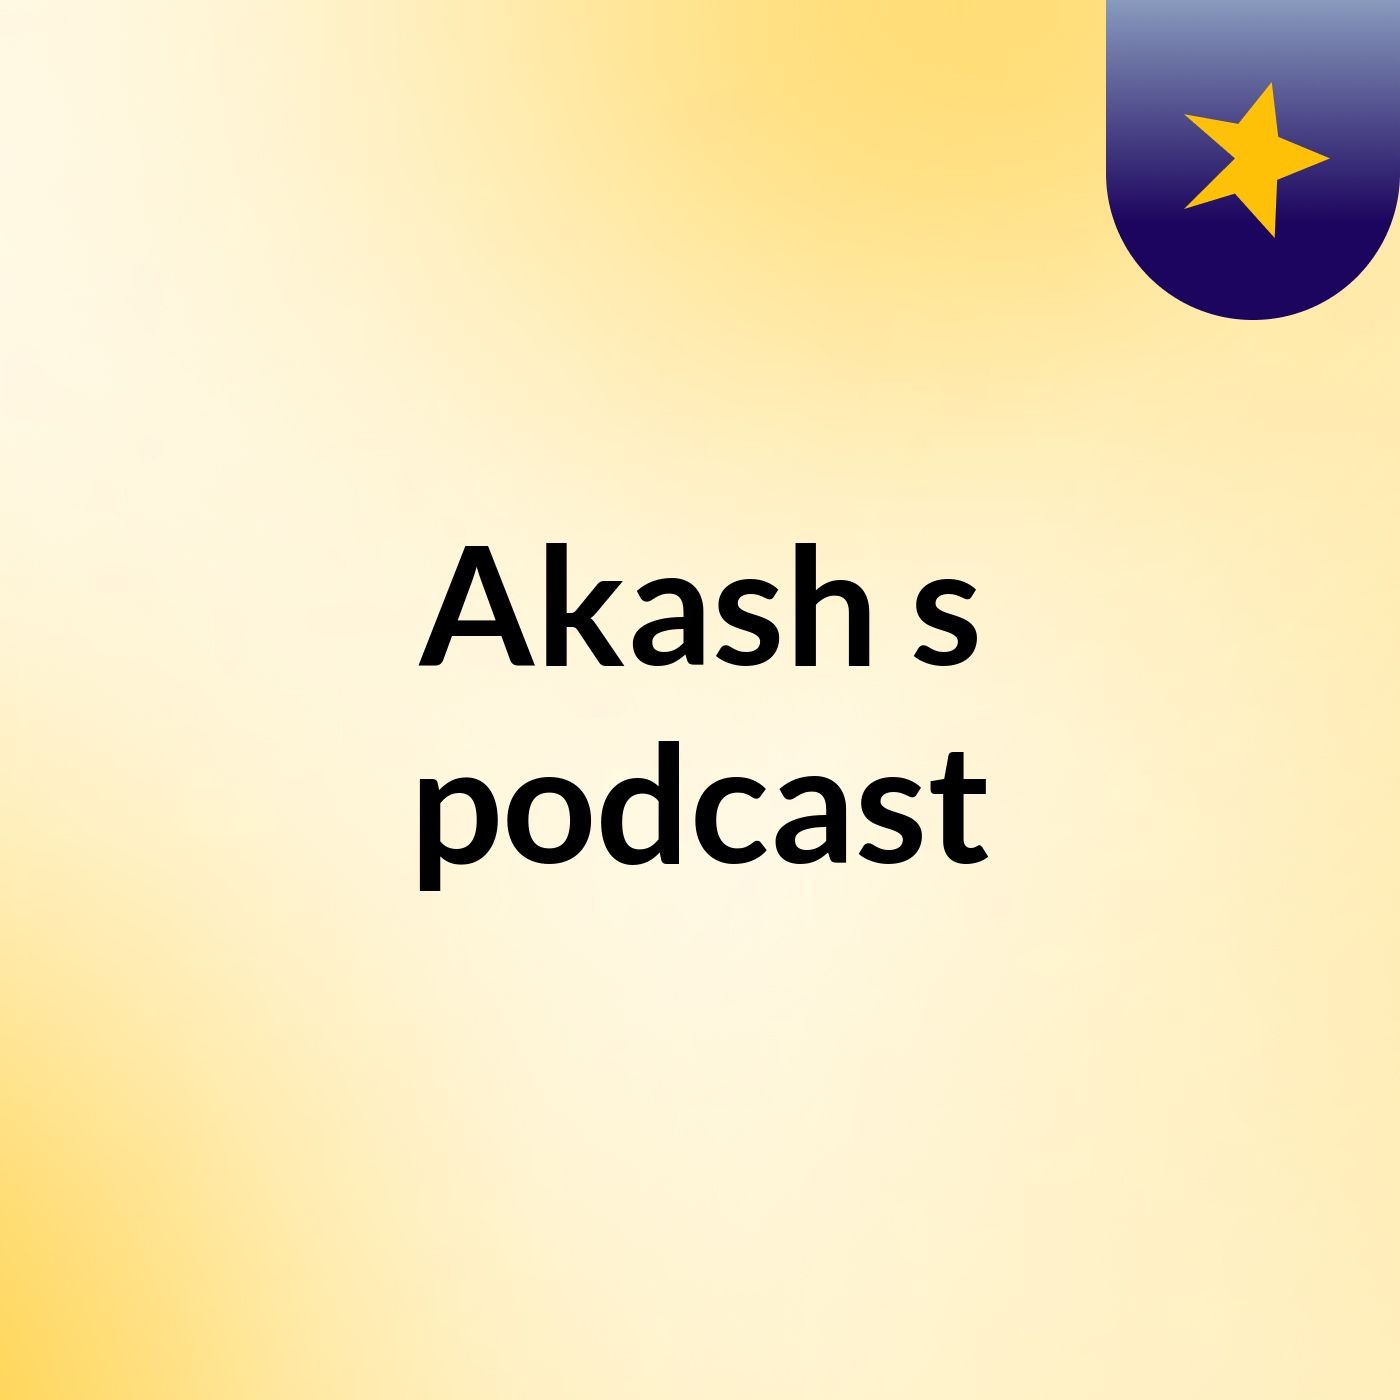 Episode 5 - Akash's podcast